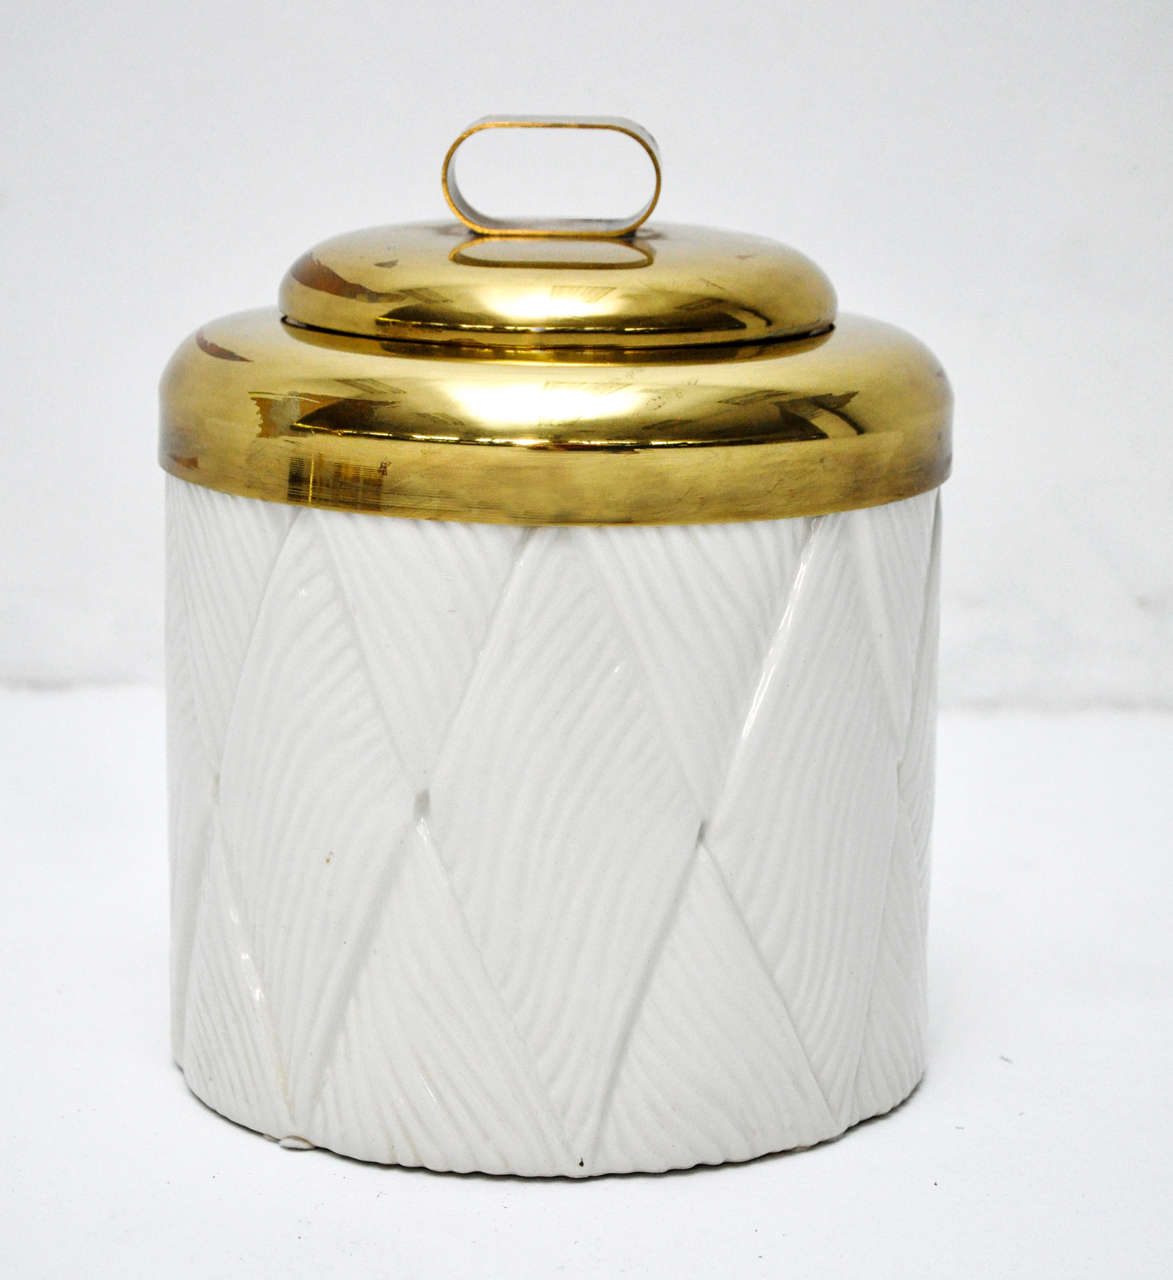 Ceramic and brass ice bucket by Tomasso Barbi.